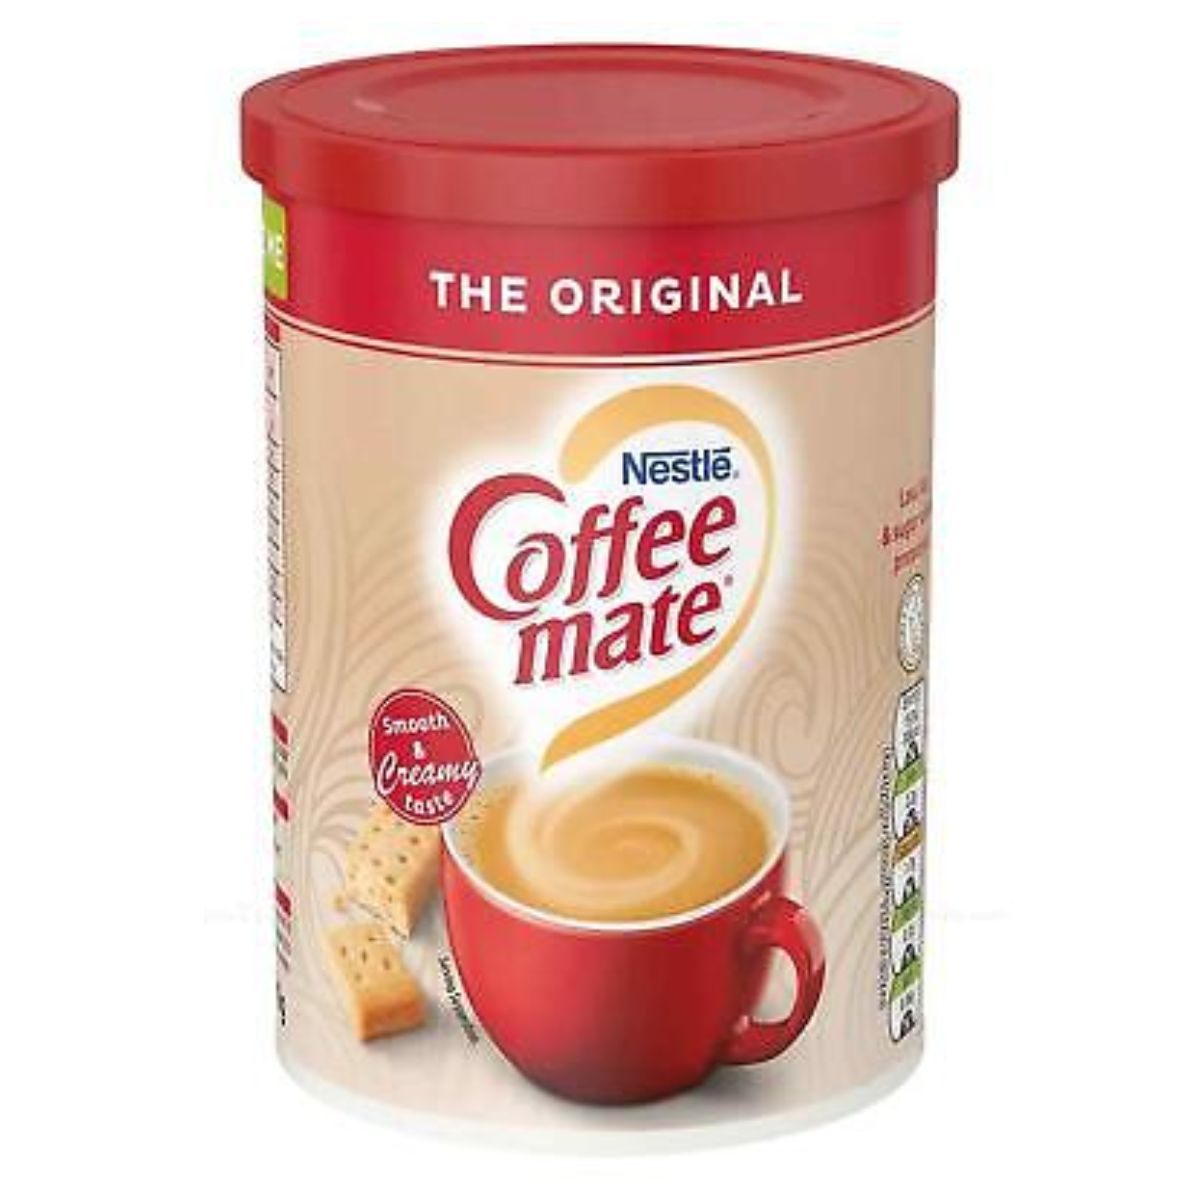 The Nestle - Coffee Mate Original Creamer Whitener Smooth Creamy Taste Tub - 550g in a tin.